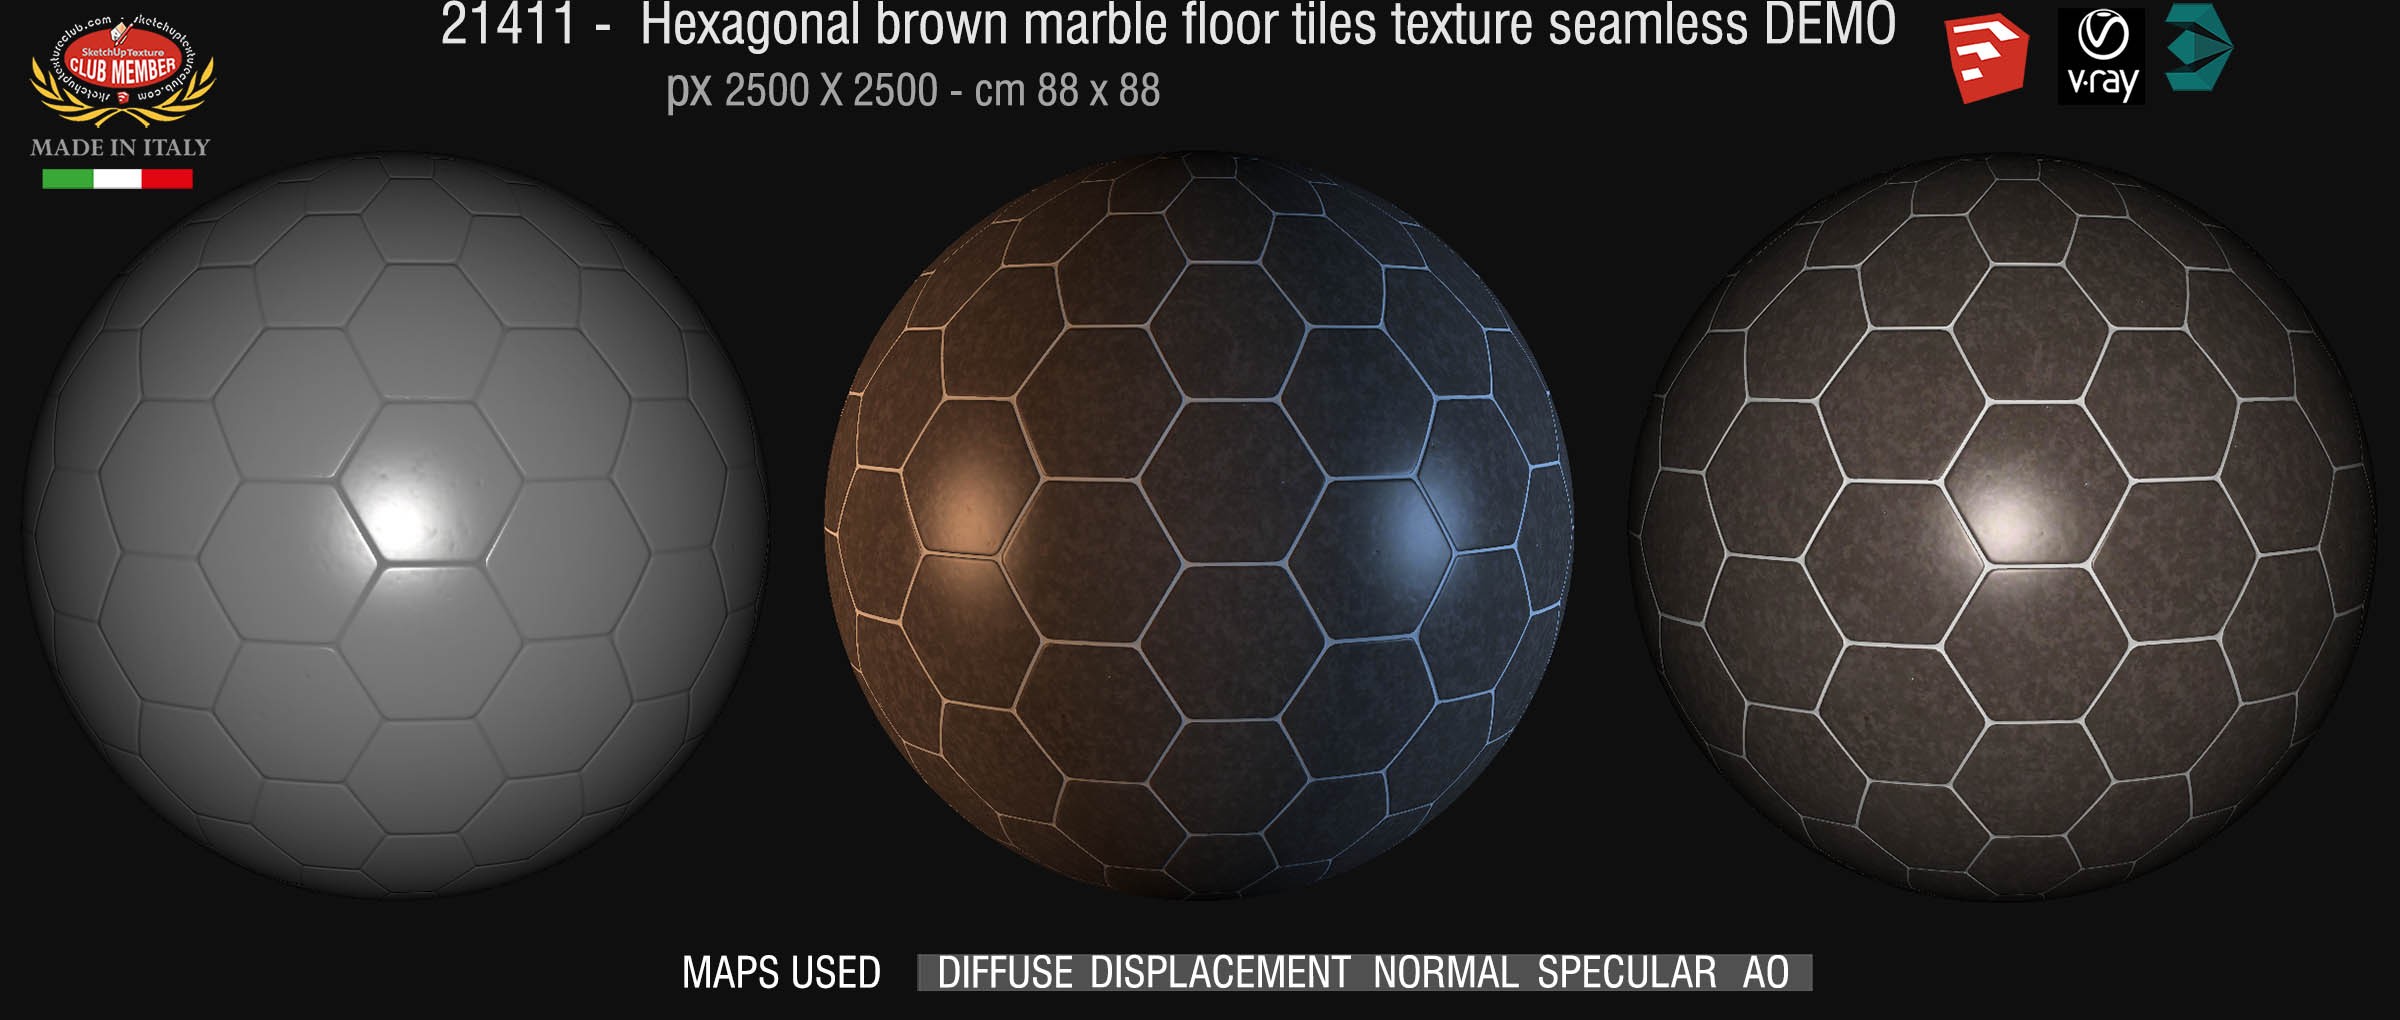 21411 hexagonal brown marble tile texture seamless + maps DEMO